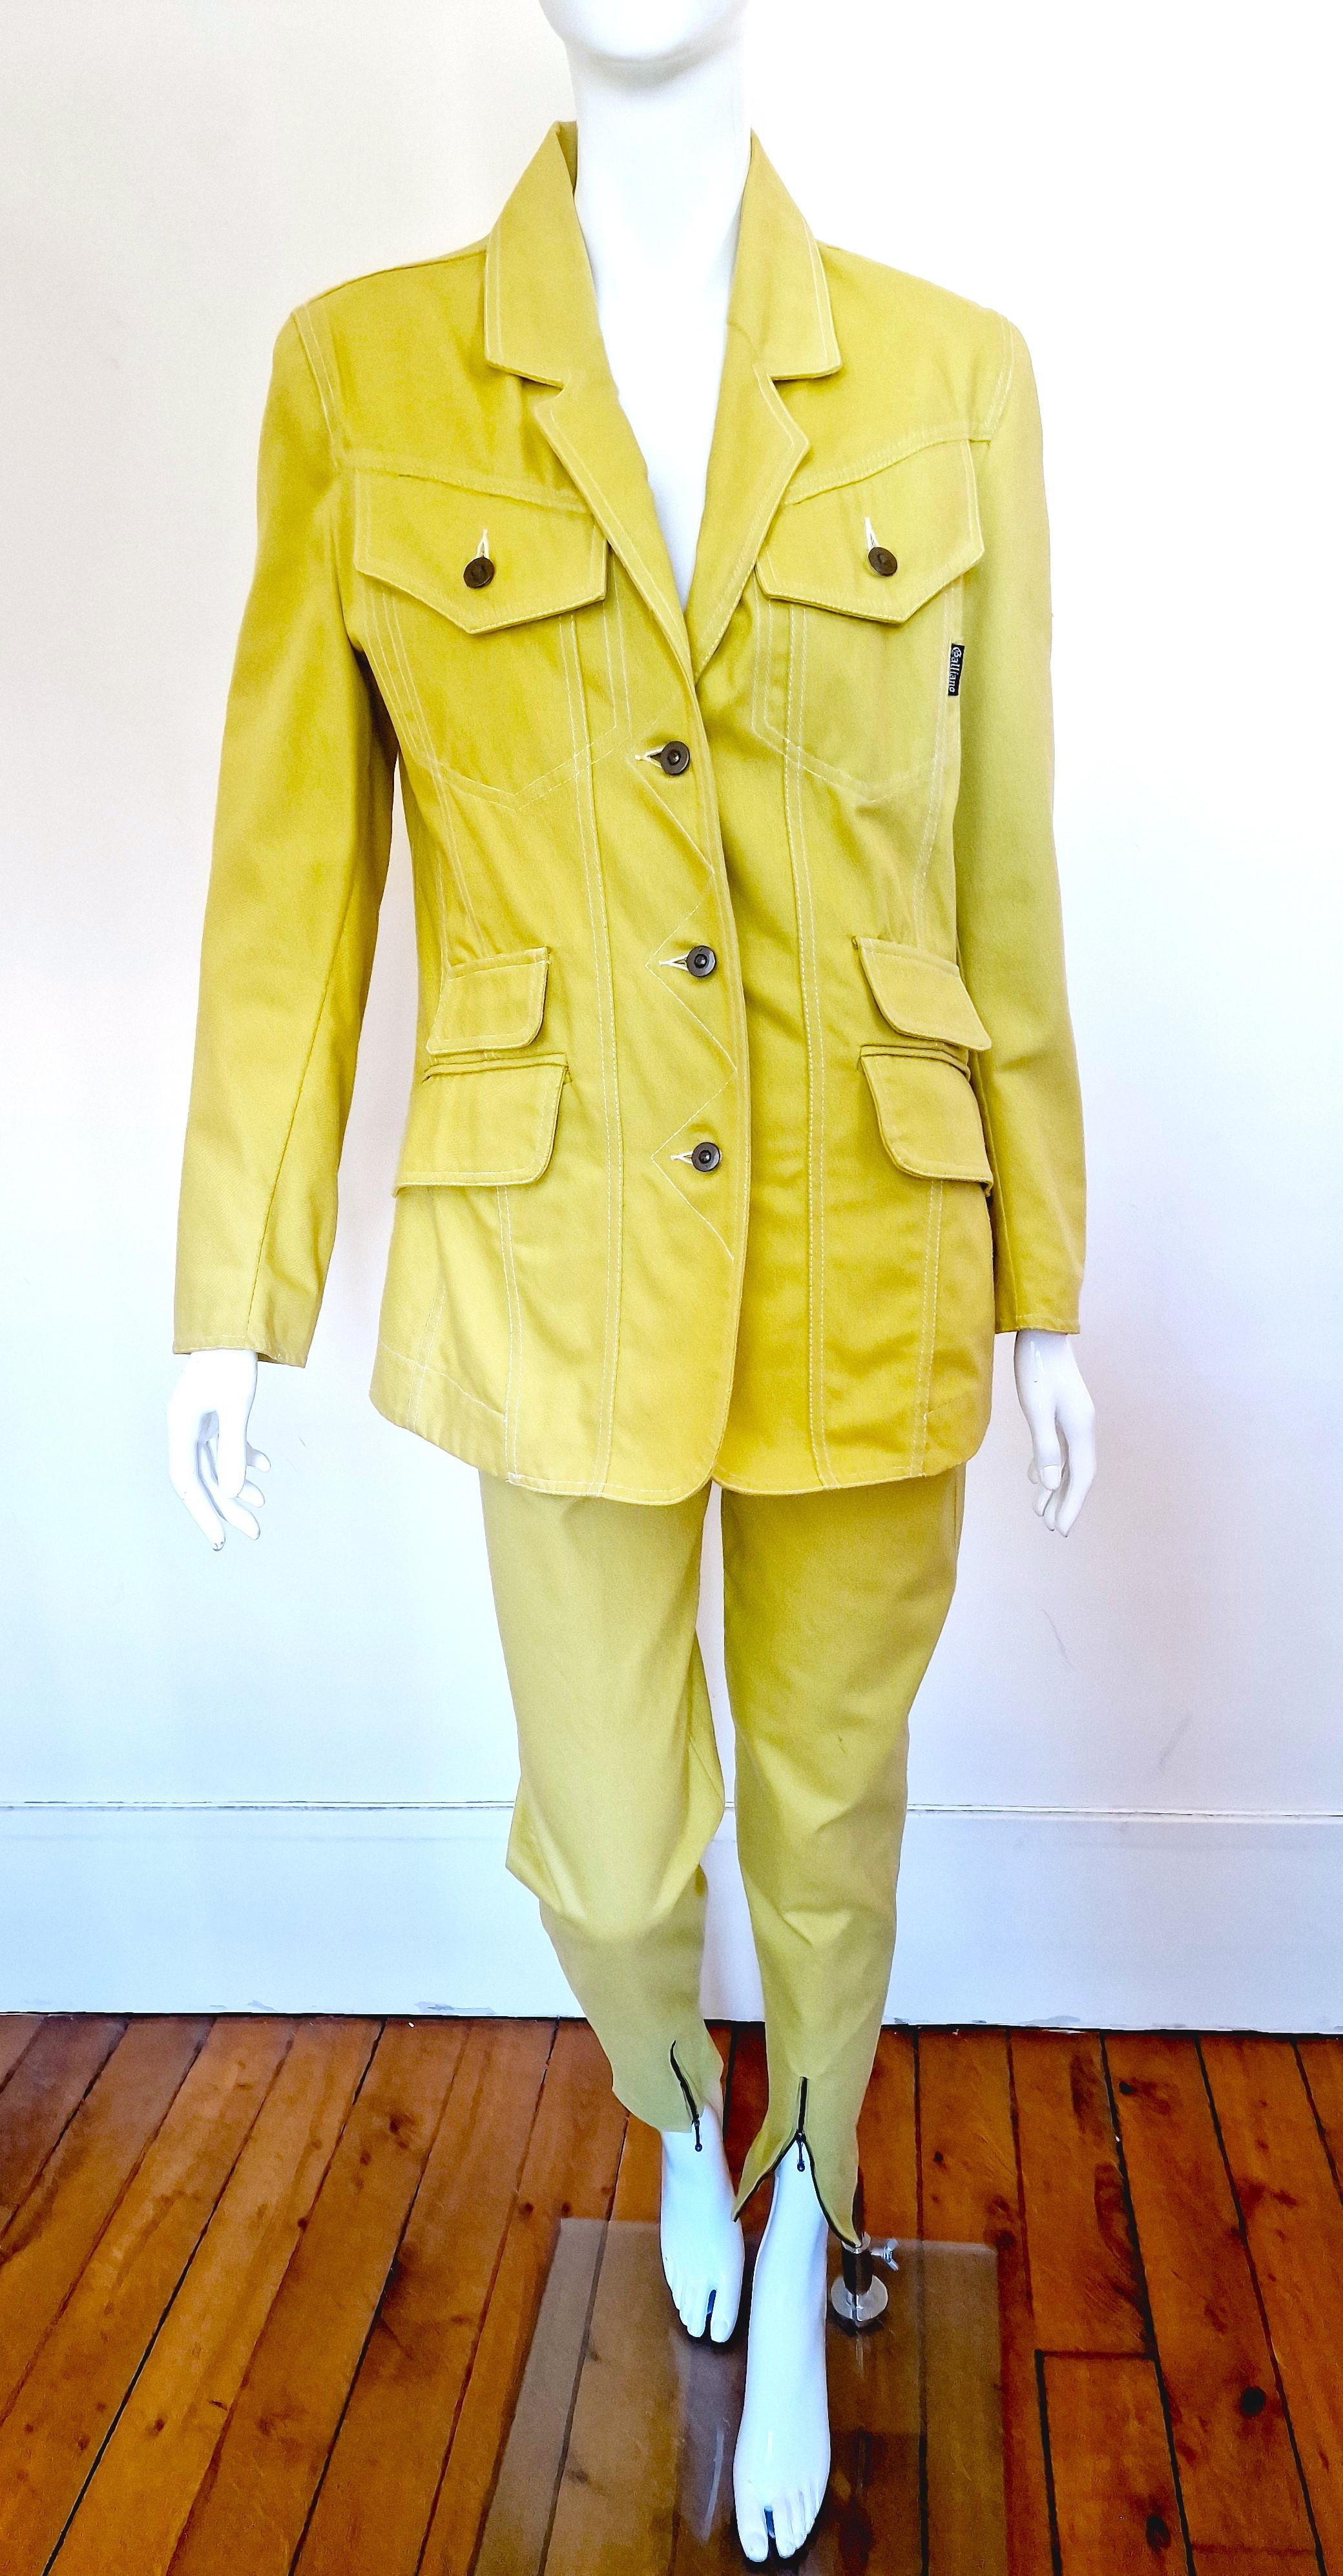 John Galliano Honcho Woman 1991 S/S Runway London Medium L Dress Ensemble Suit For Sale 2